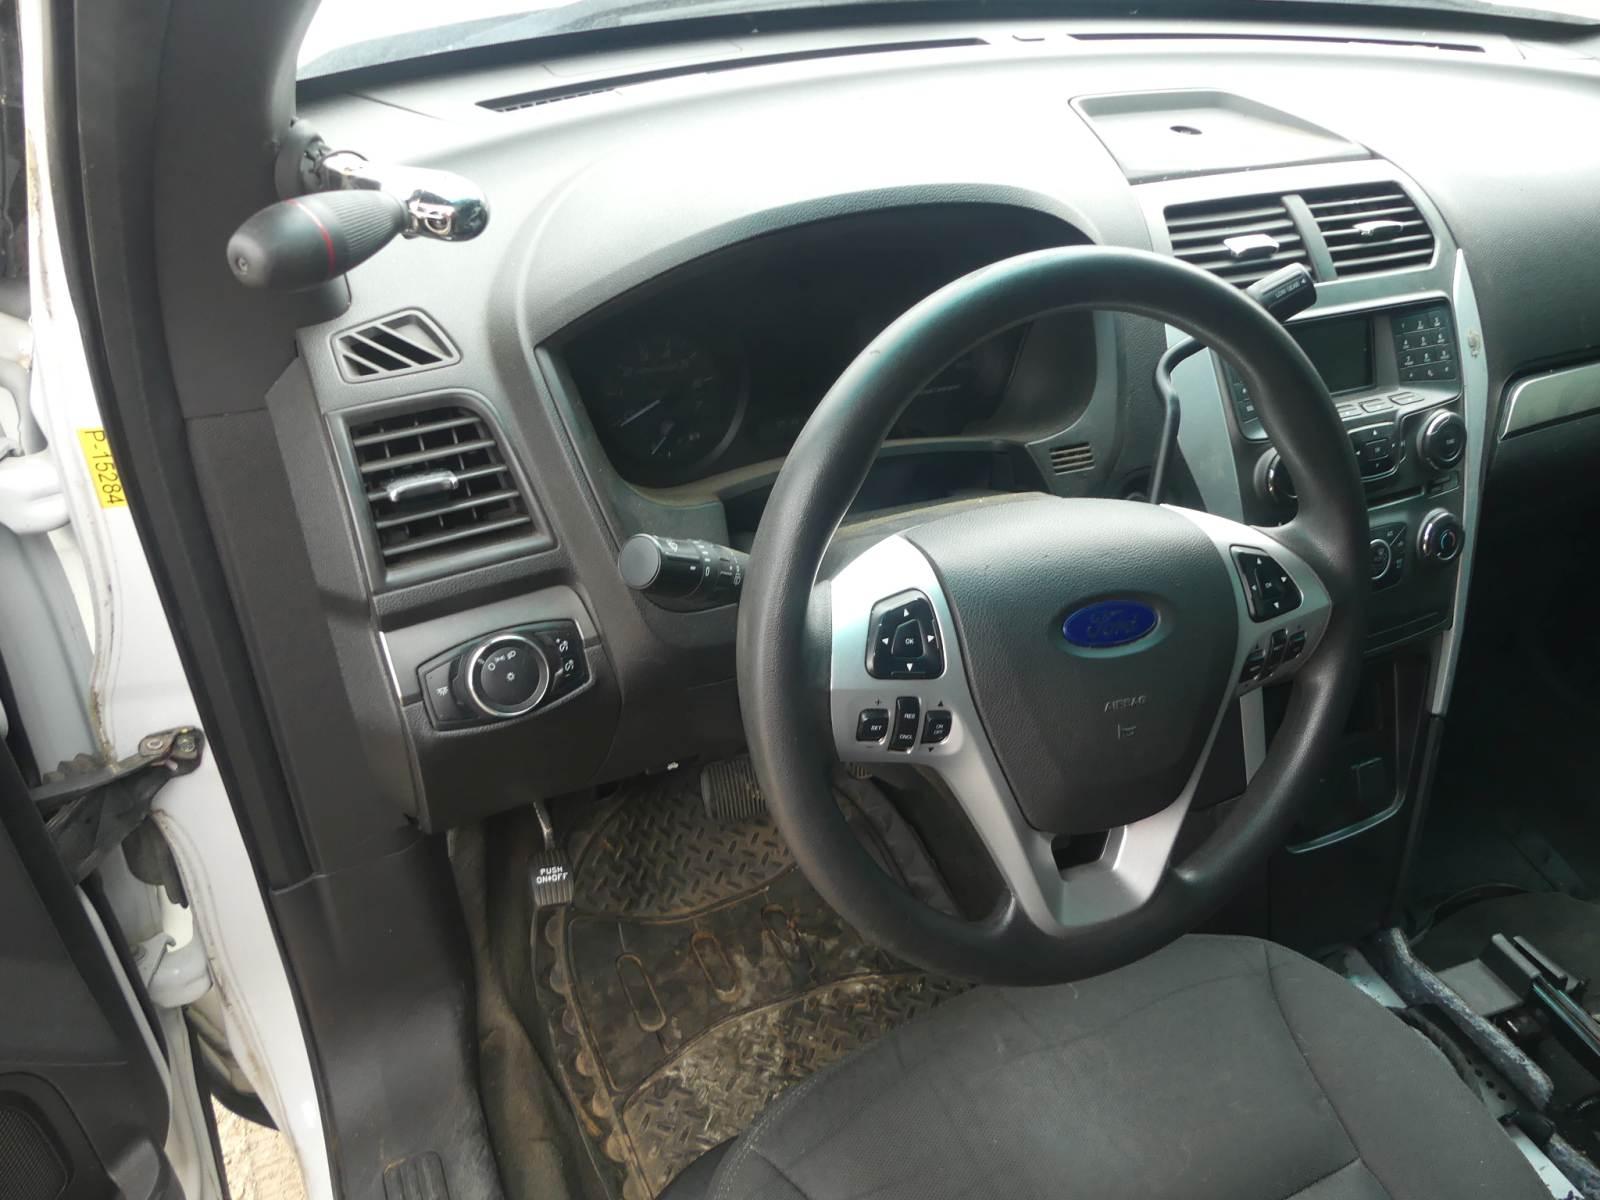 2015 Ford Explorer AWD SUV, s/n 1FM5K8ARXFGC276414: 4-door, Gas Eng., Auto,